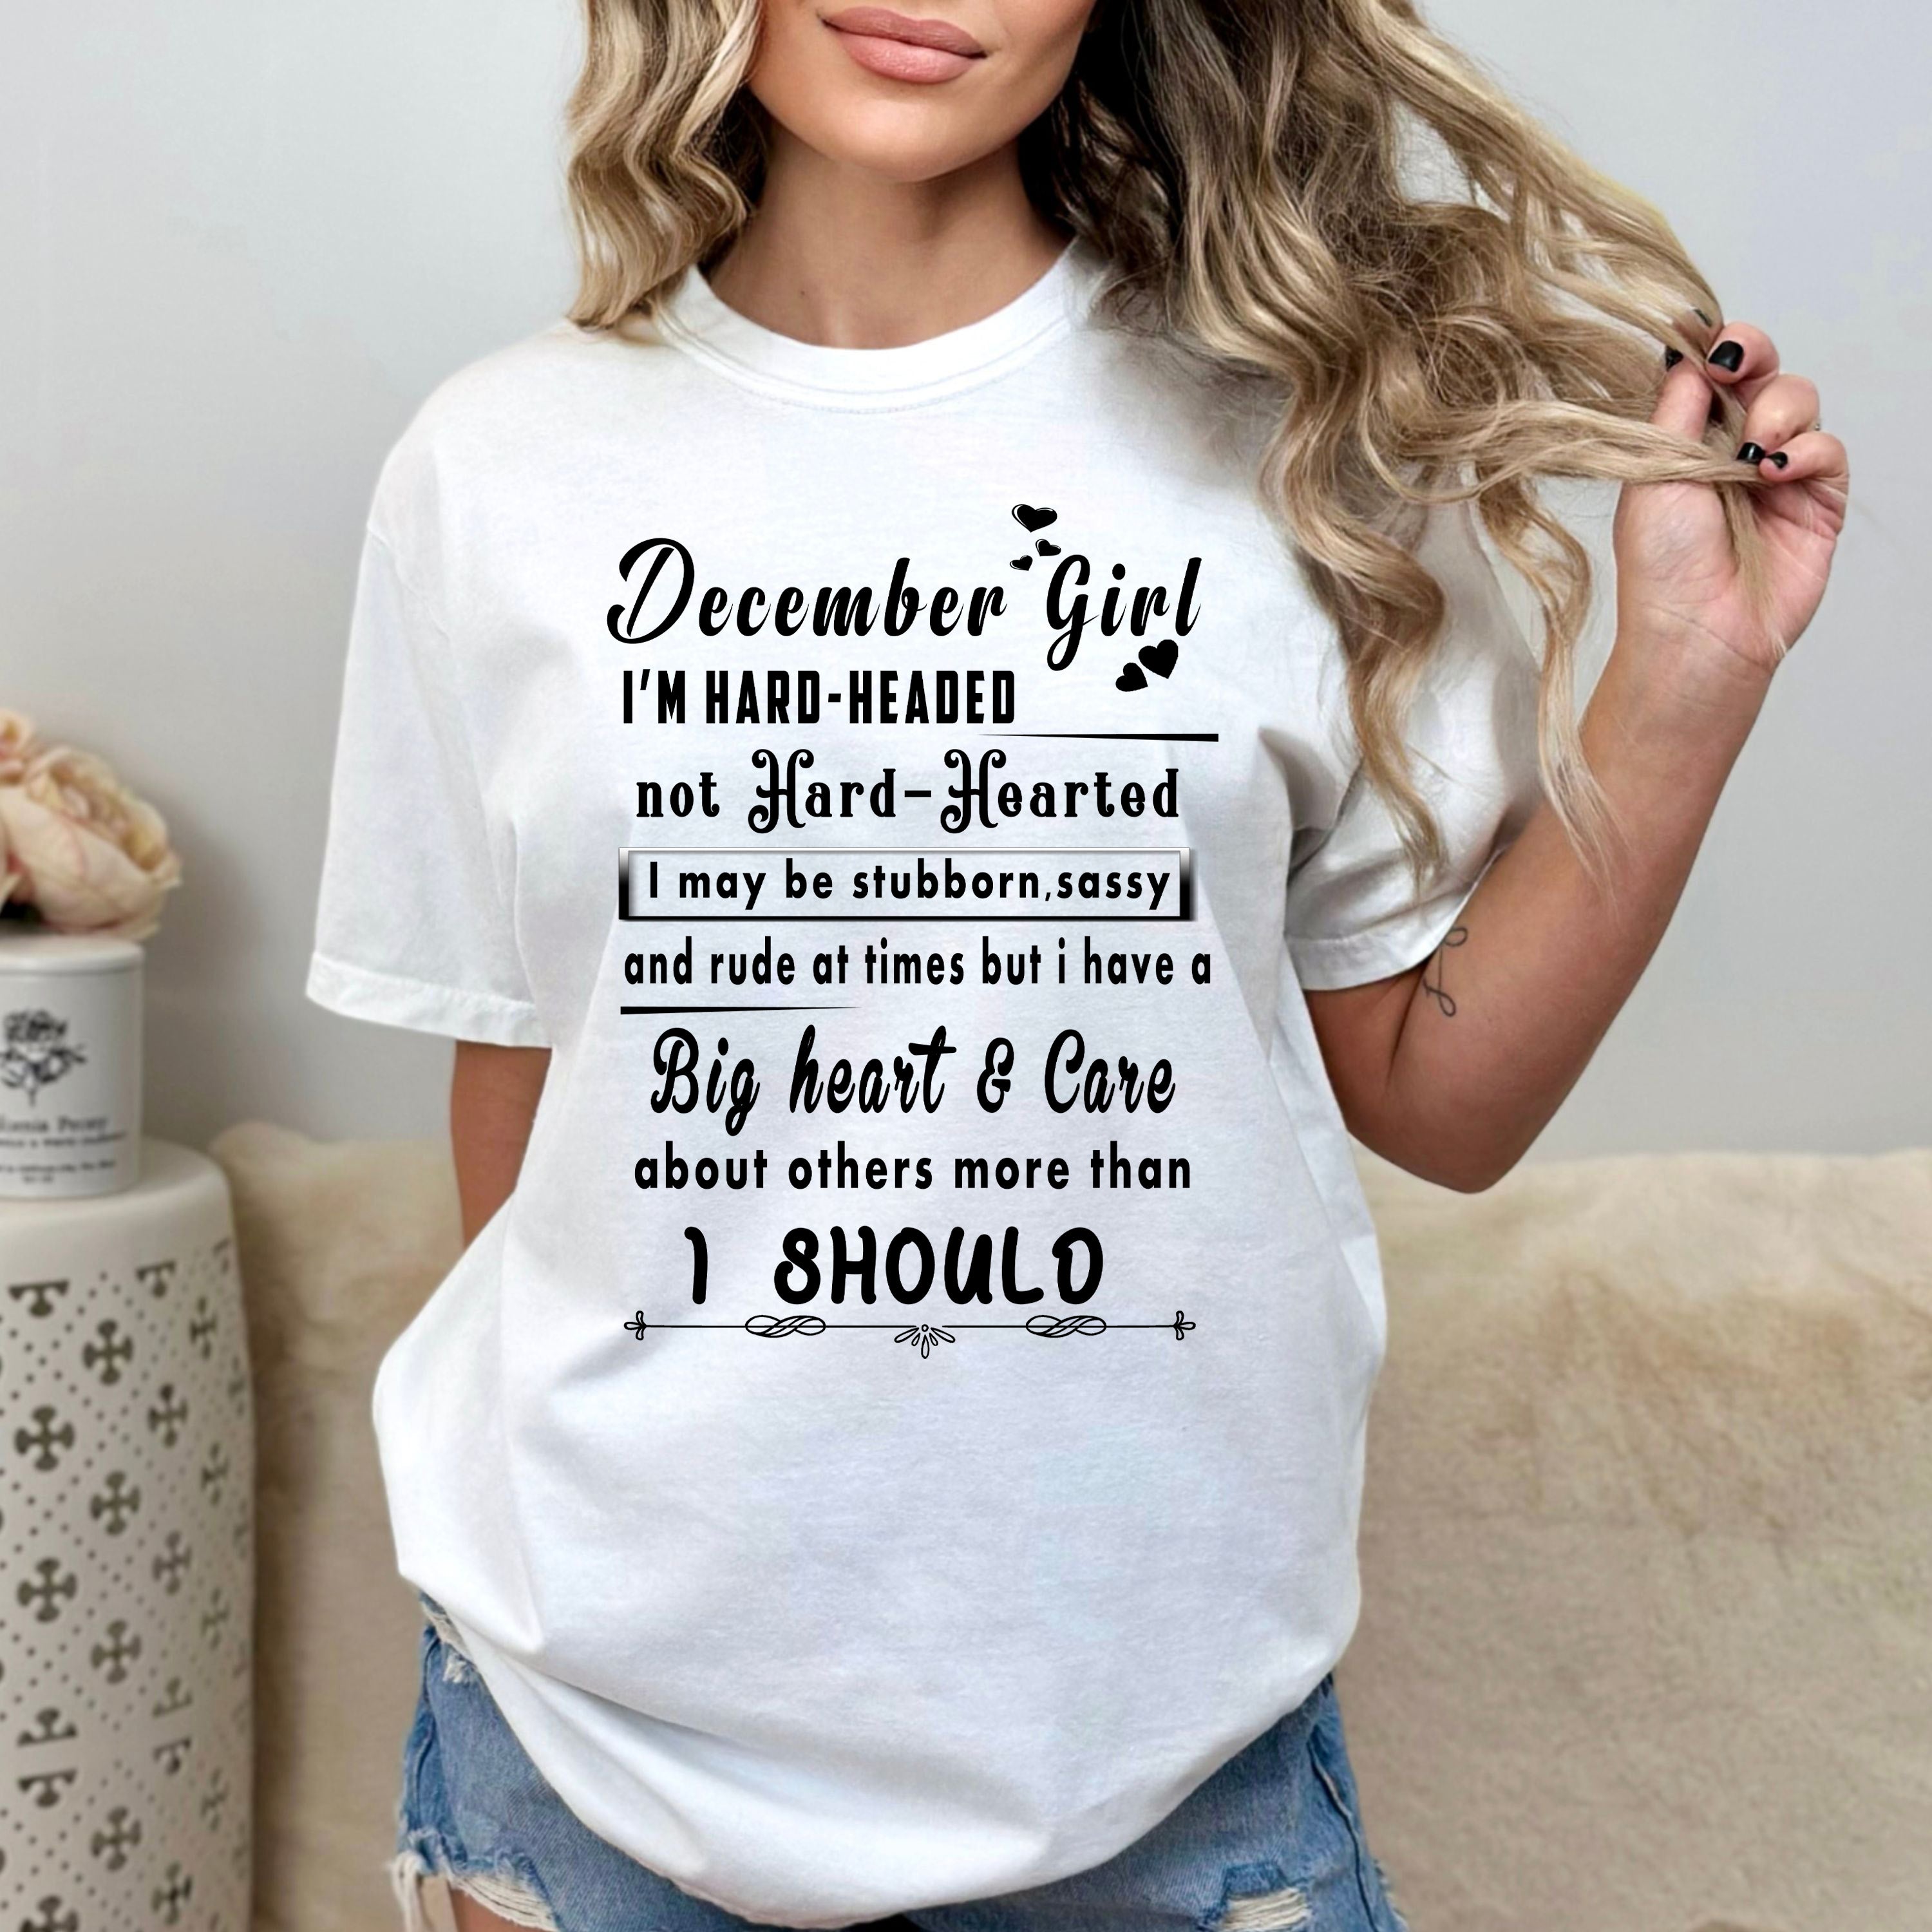 "December Girl I'm Hard-Headed, Not Hard-Hearted"